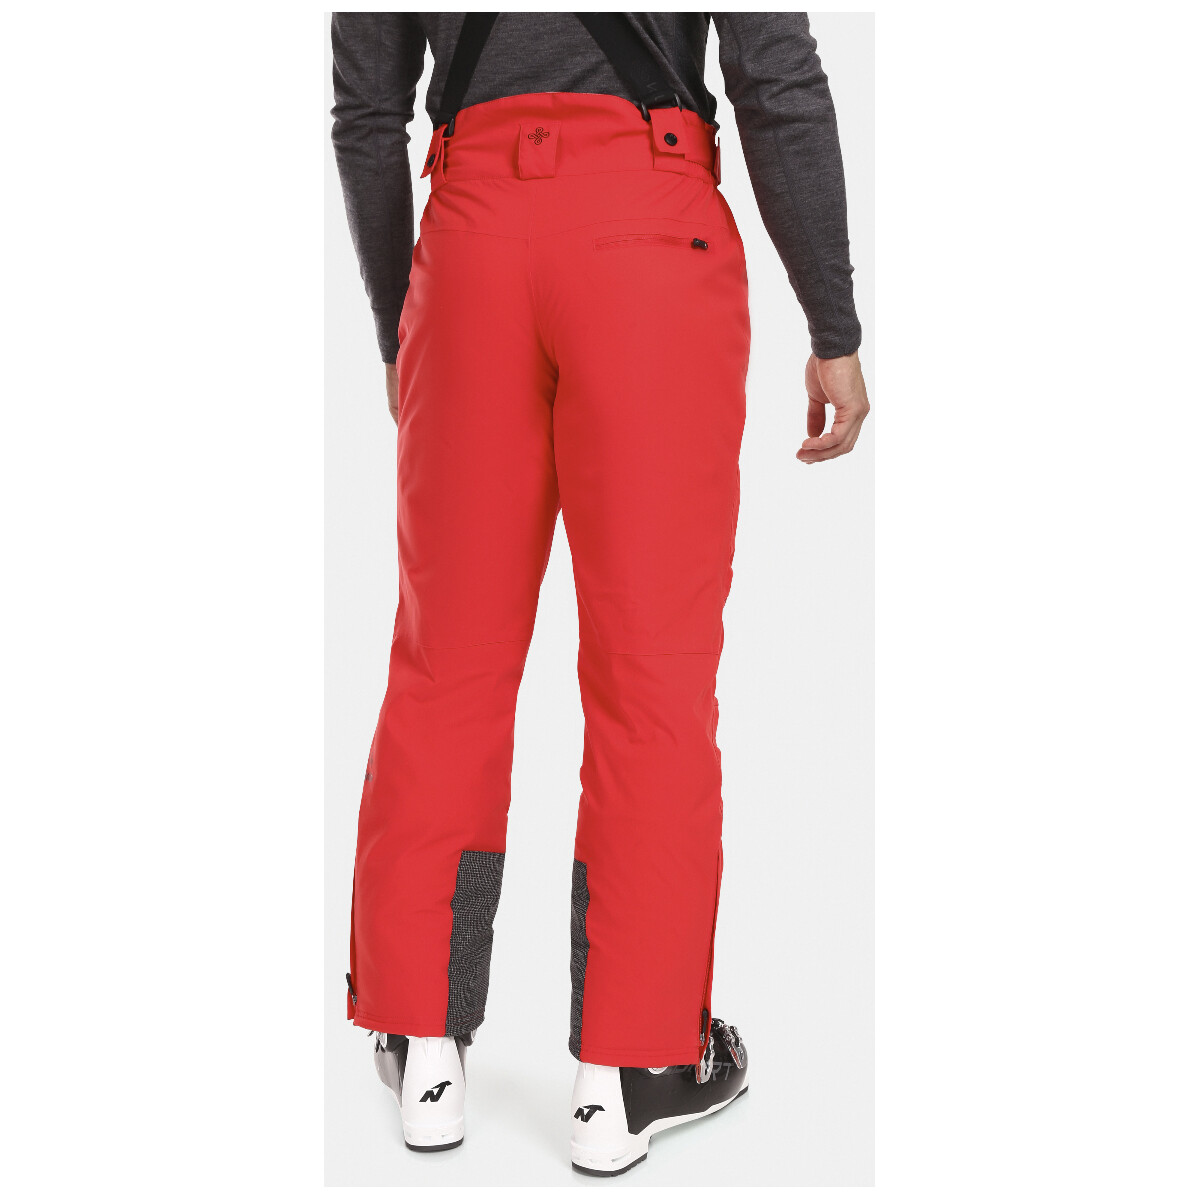 Kilpi Rouge Pantalon de ski pour homme MIMAS-M 3o1AgD2u